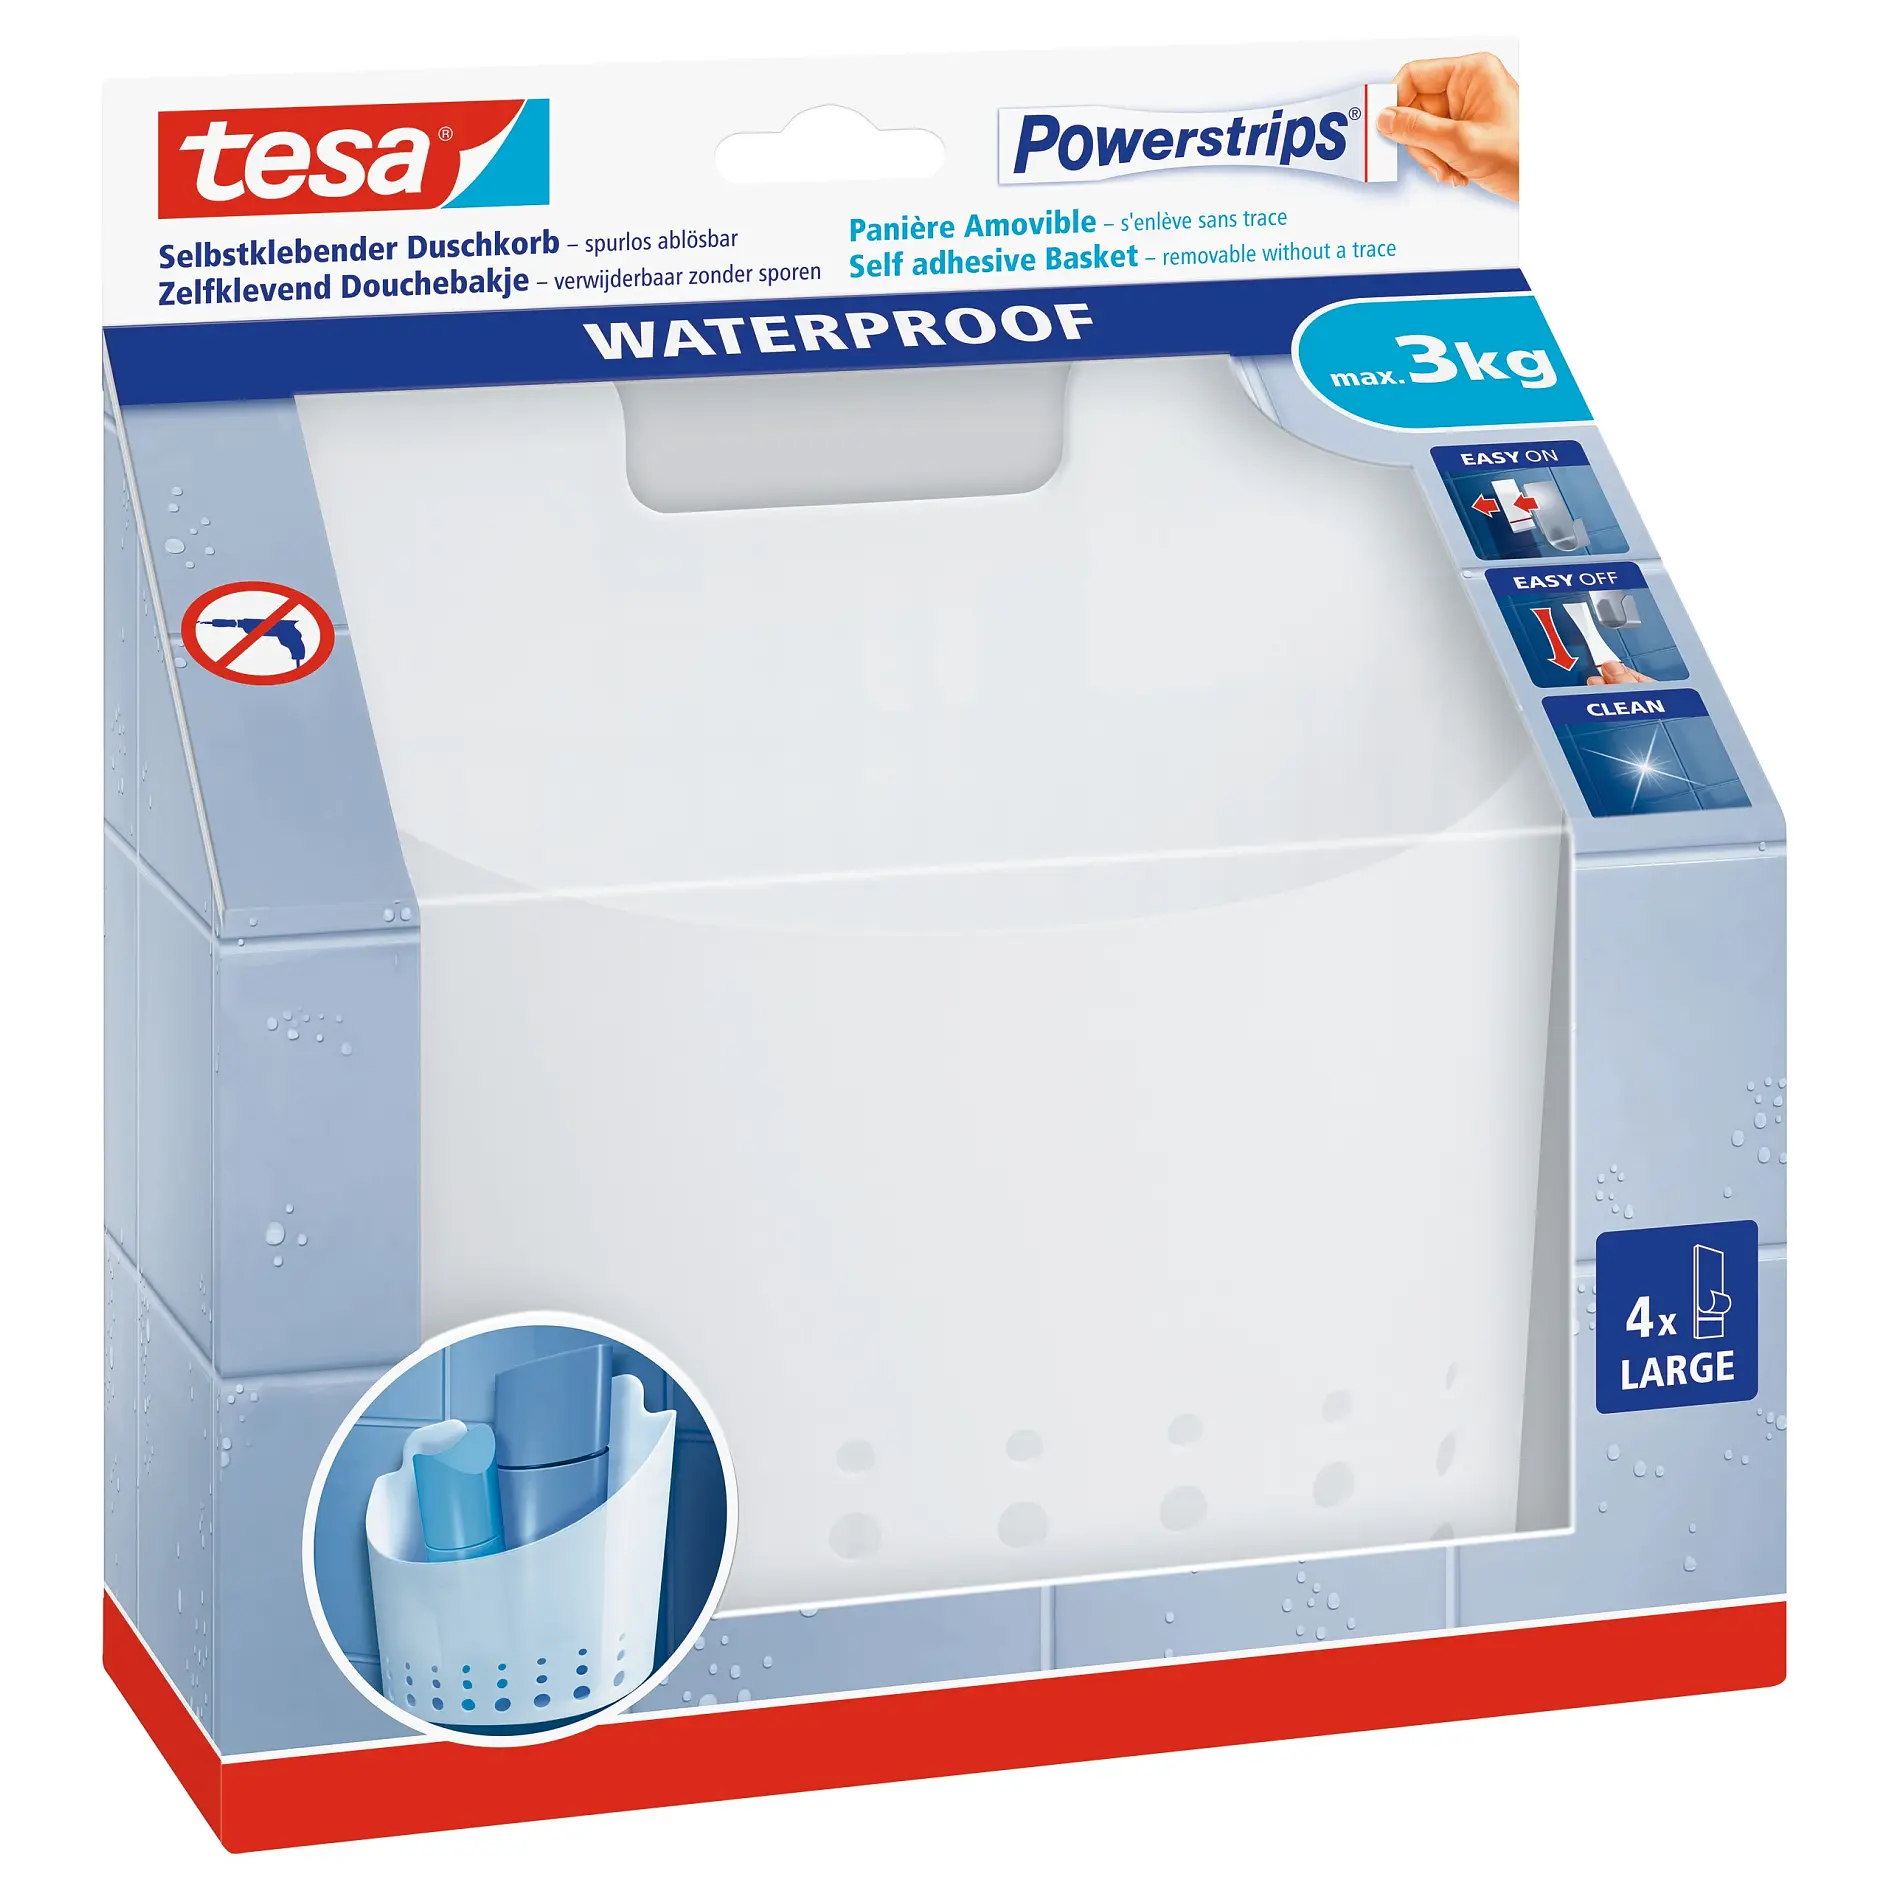 [en-en] tesa Powerstrips waterproof basket large